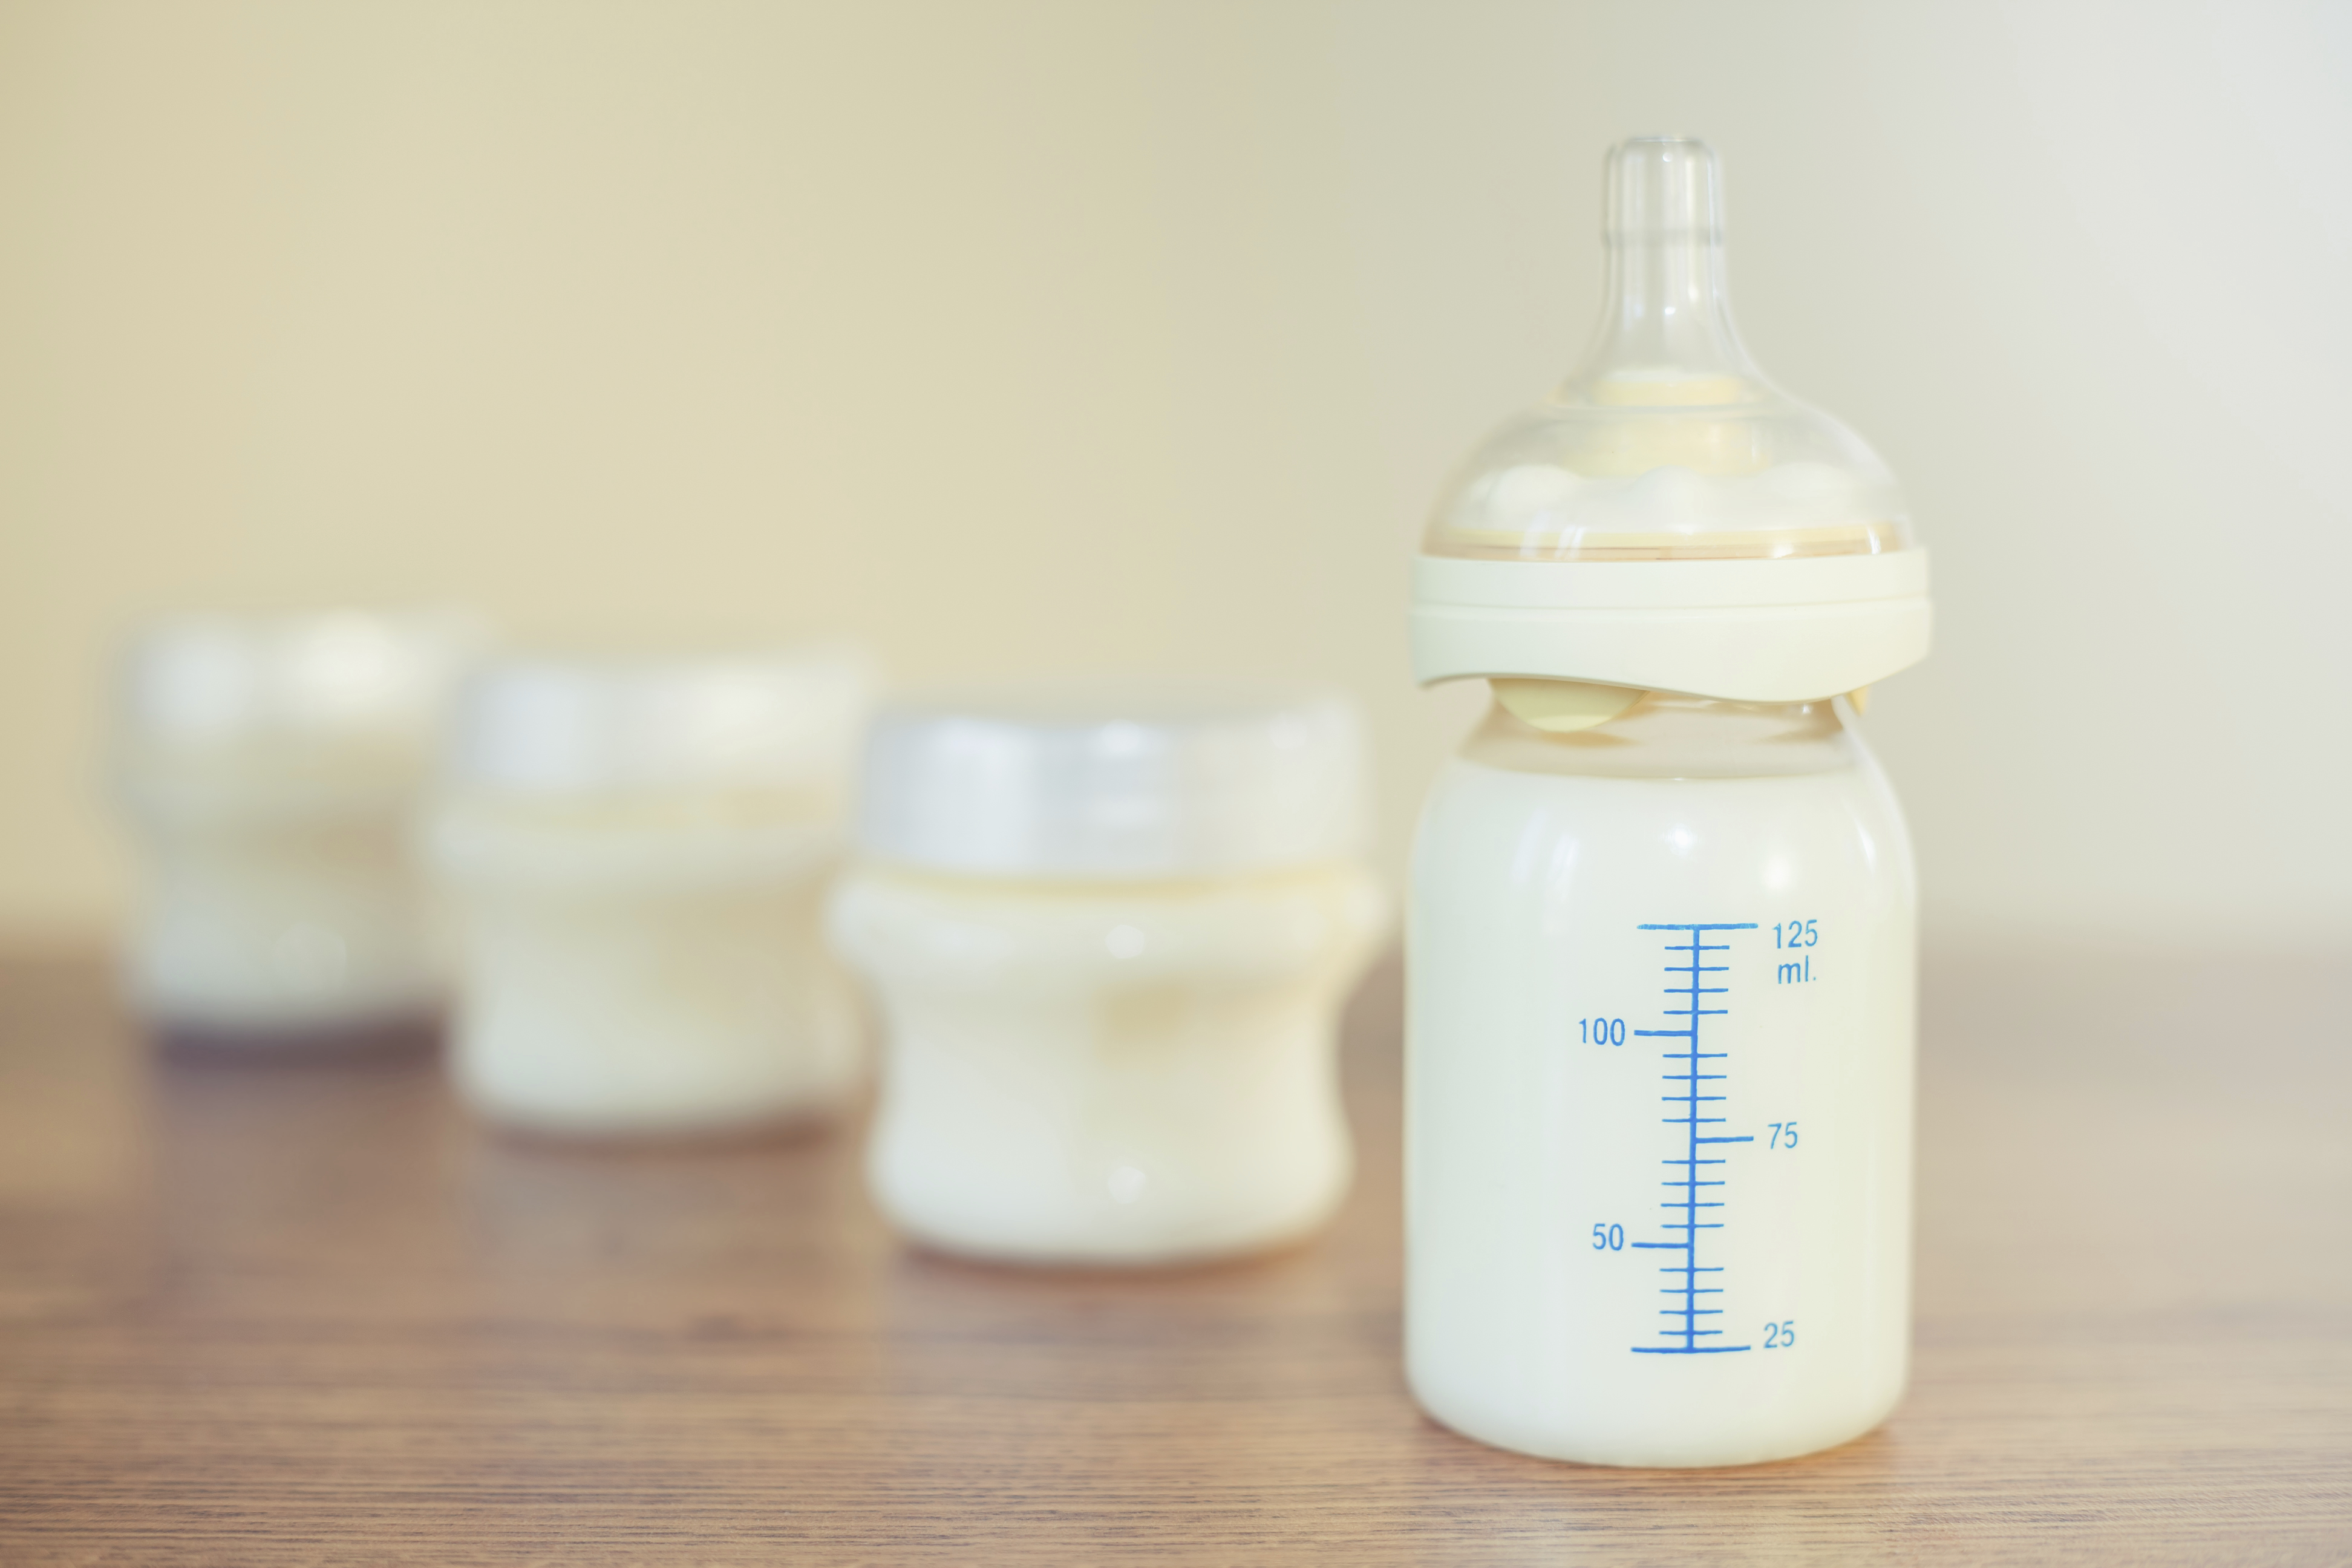 Adult Health Craze For Human Breast Milk Poses Risks Cbs News